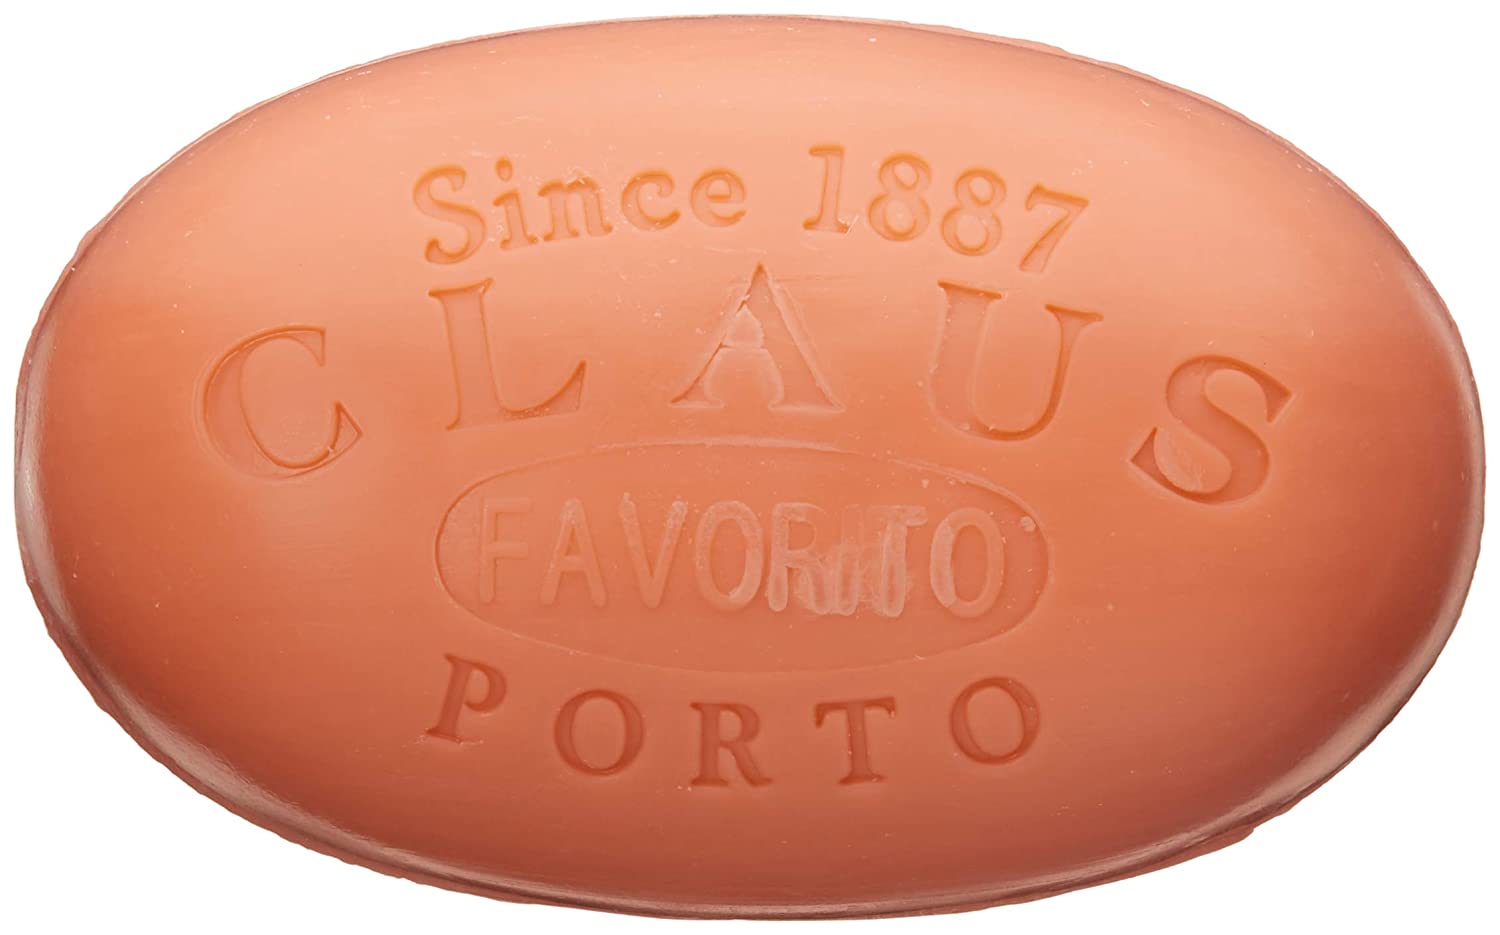 Claus Porto Favorite Bar Soap